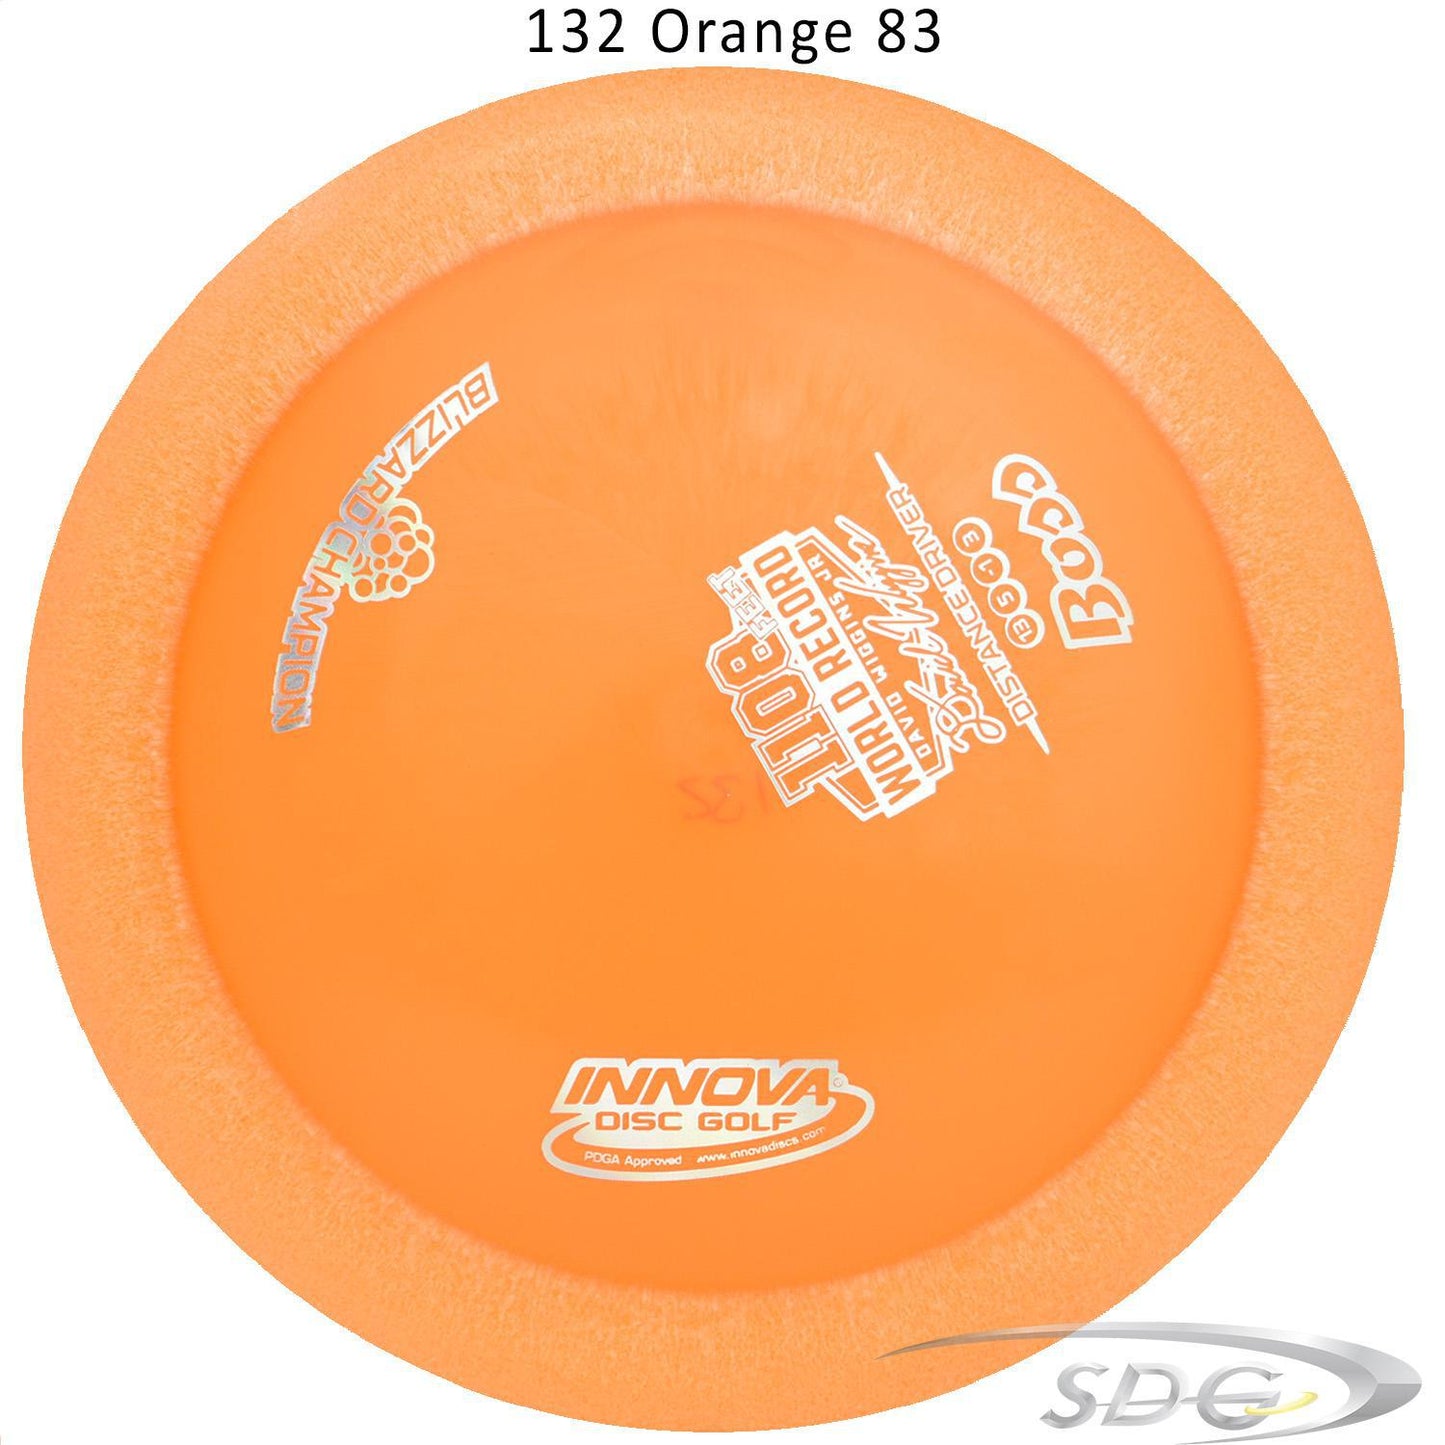 innova-blizzard-champion-boss-disc-golf-distance-driver 132 Orange 83